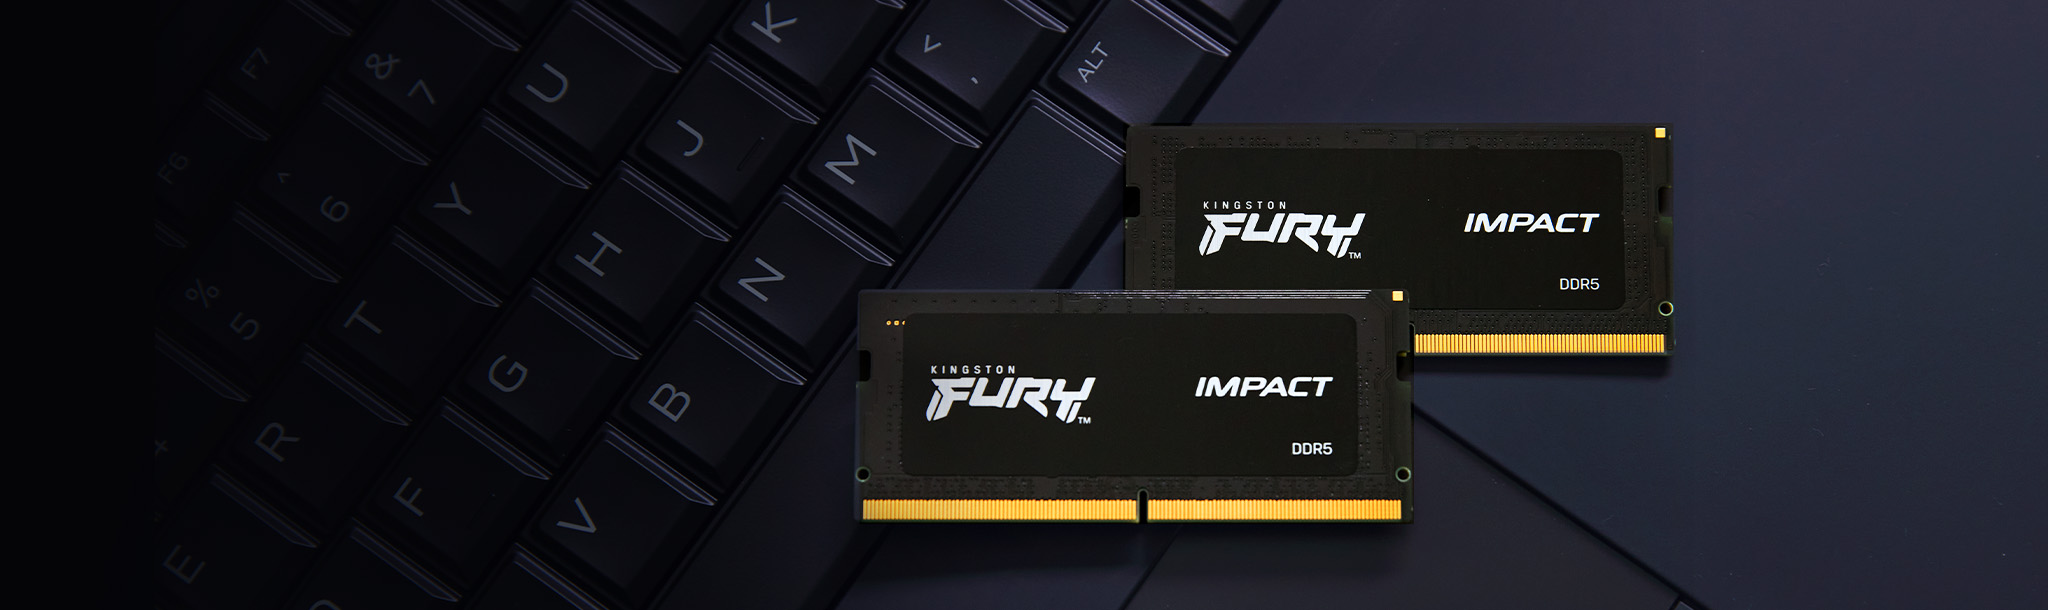 強大的 DDR5 SODIMM 效能